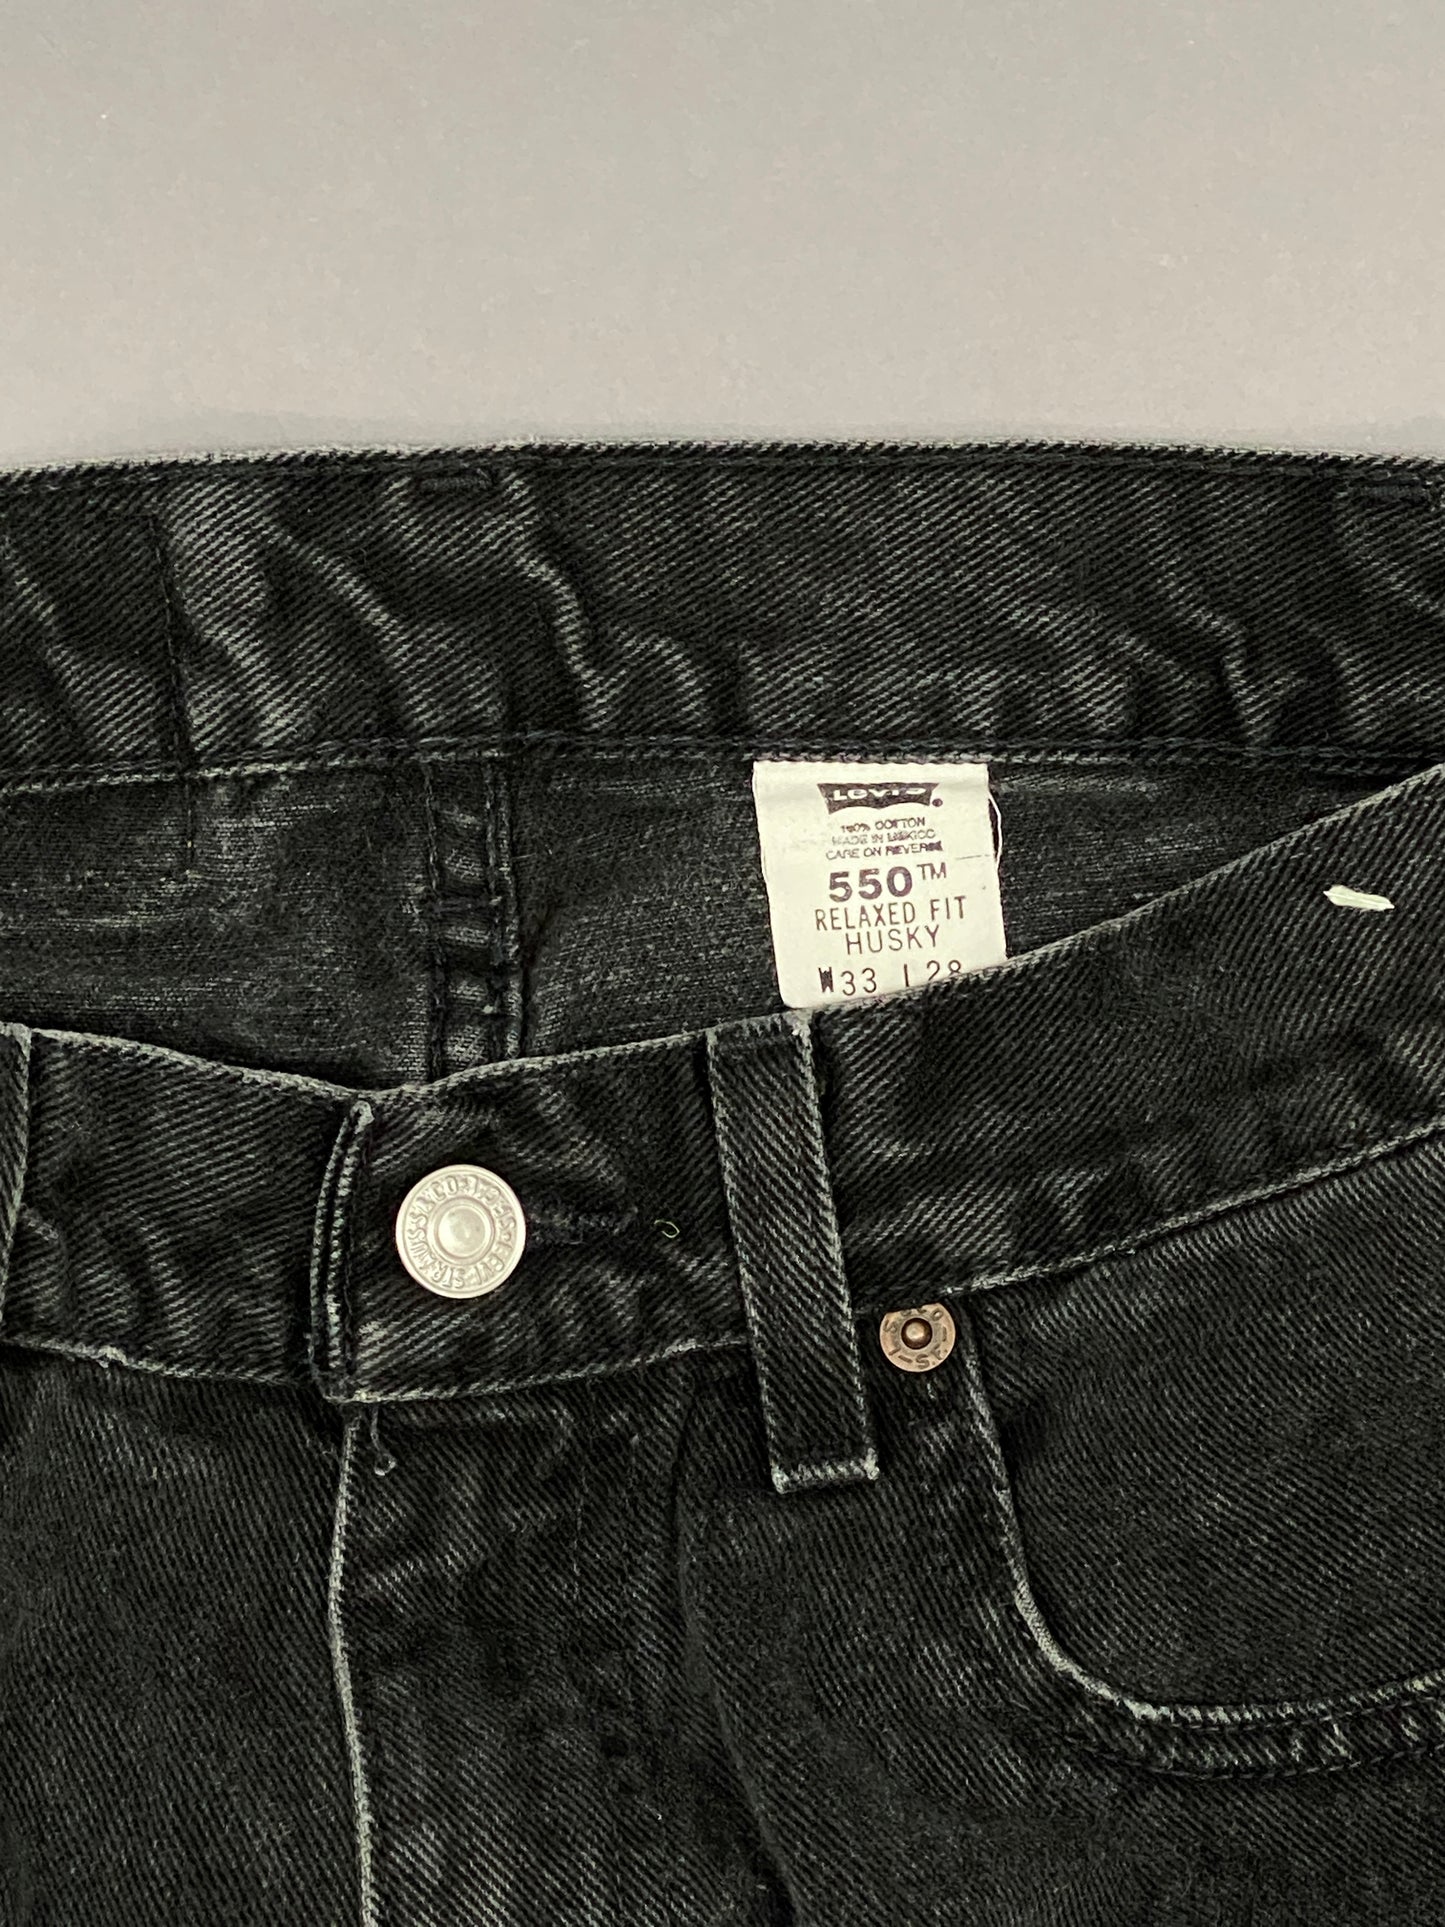 Levis 550 Husky Vintage Jeans - 33 x 28